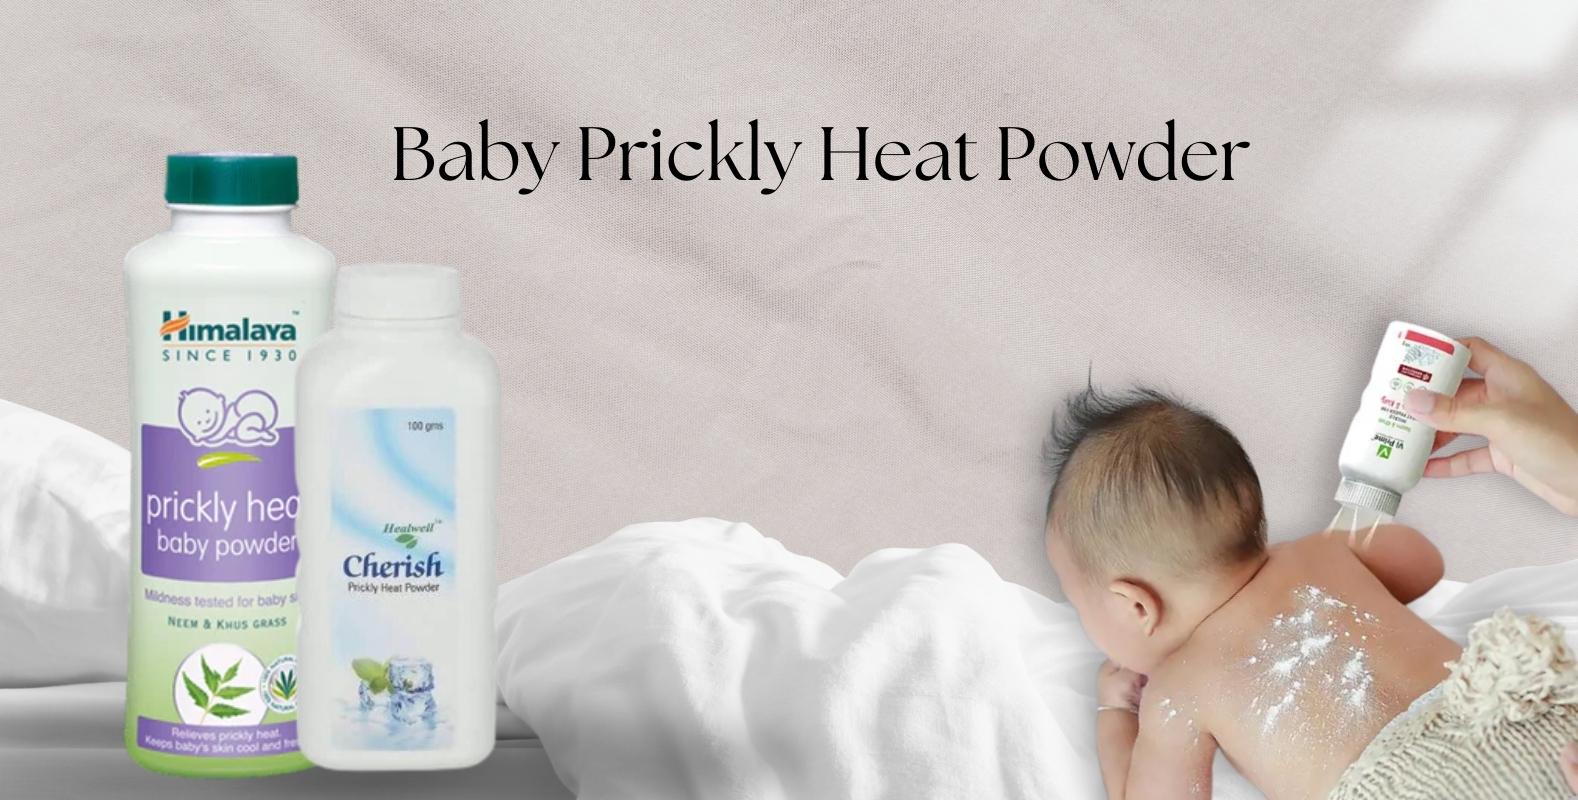 Baby Prickly Heat Powder